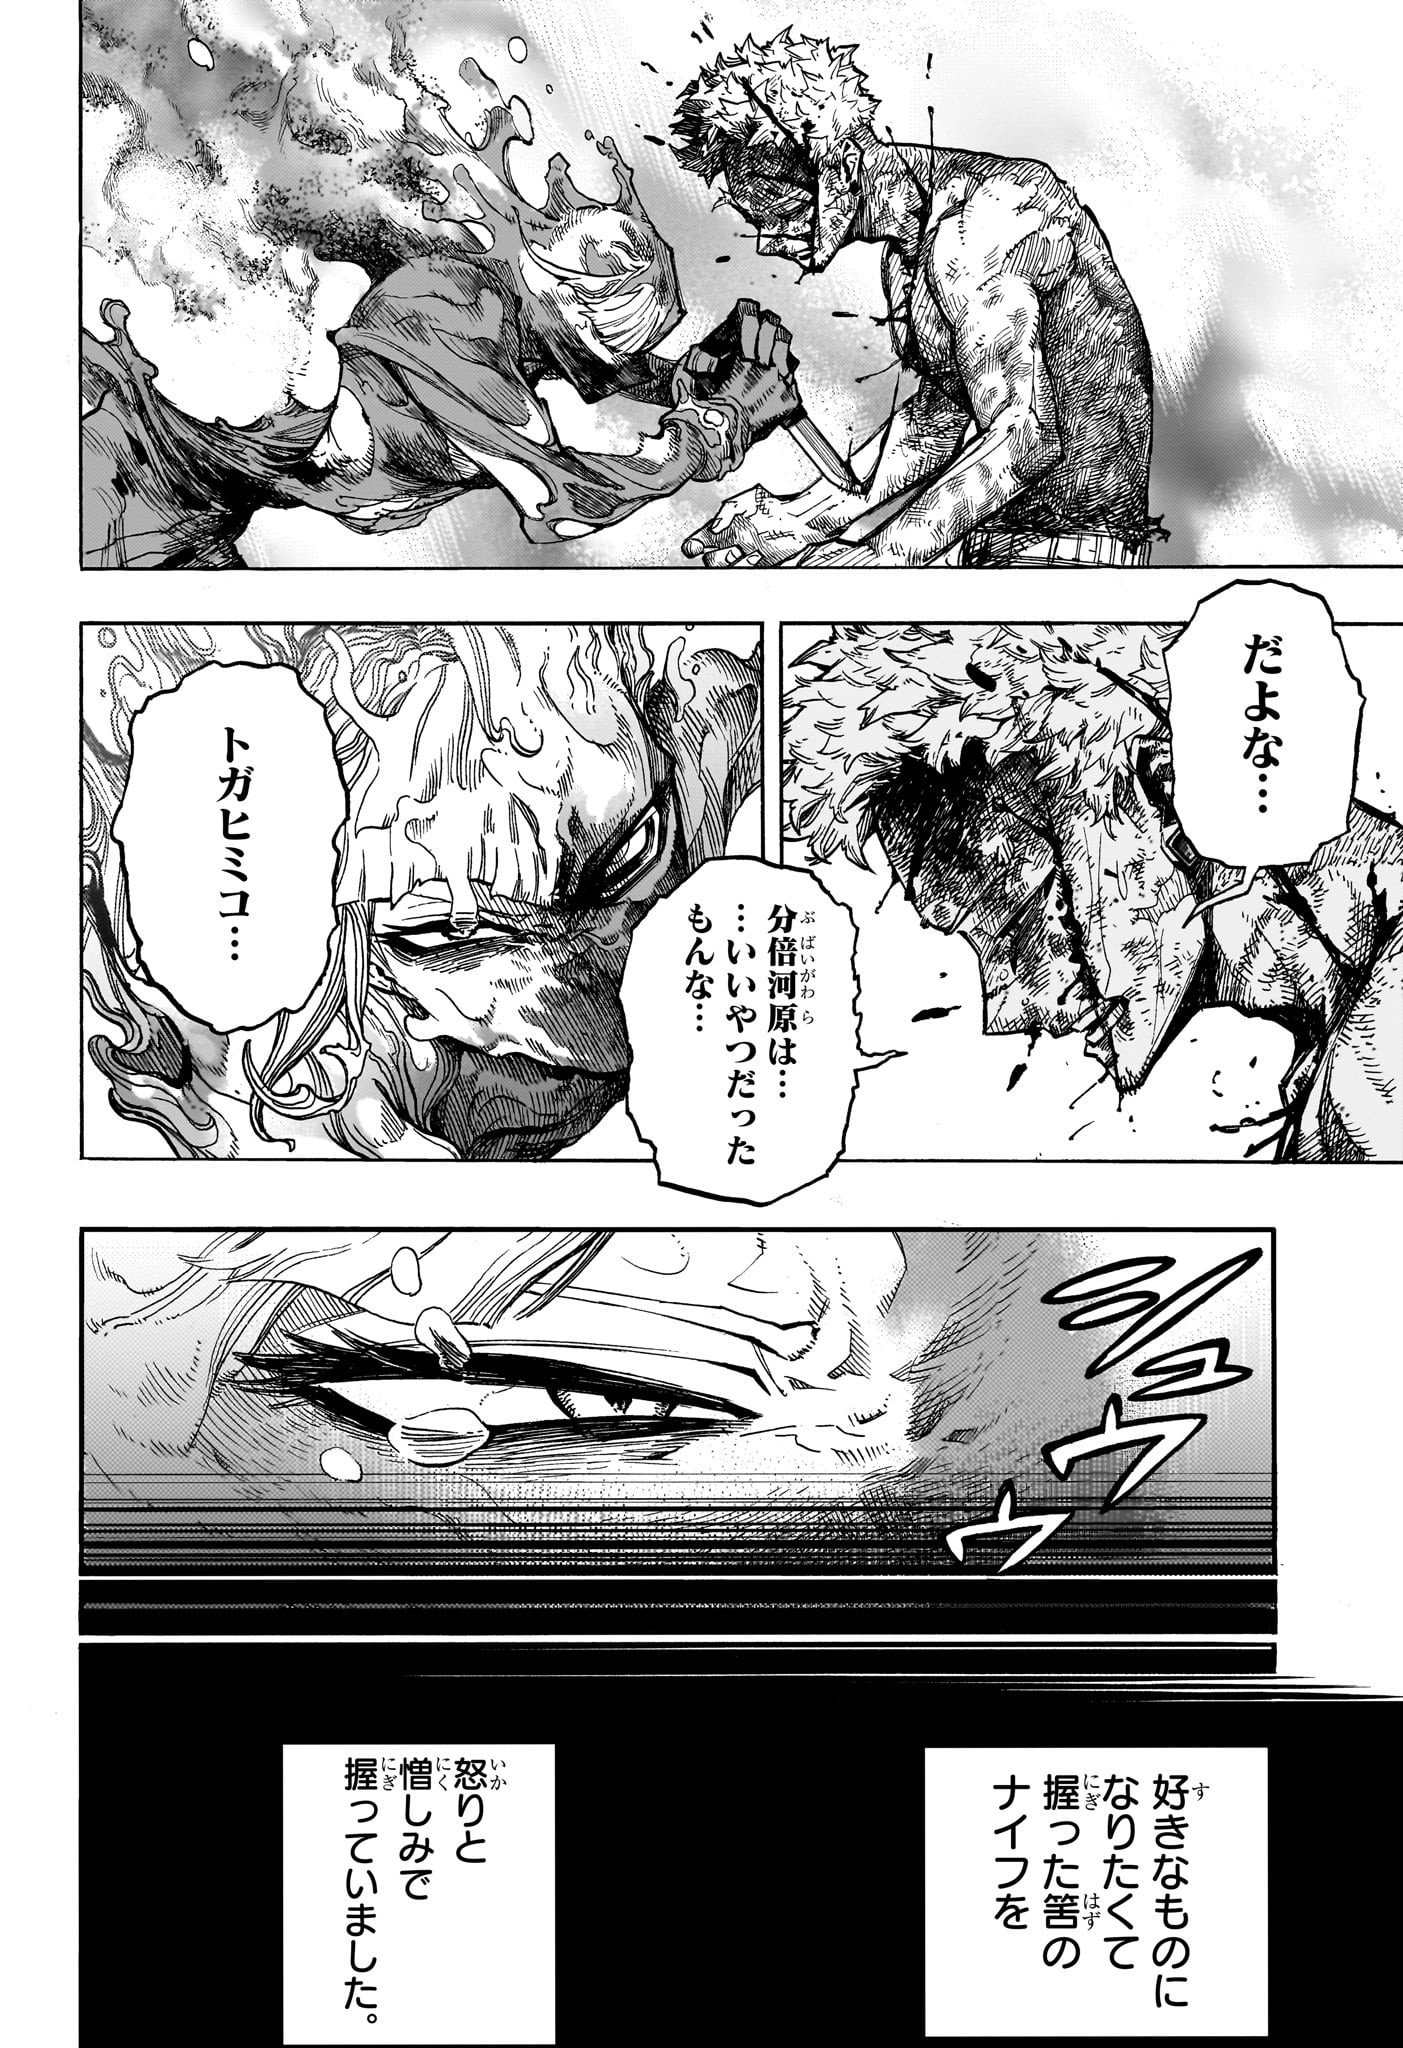 Boku no Hero Academia - Chapter 395 - Page 2